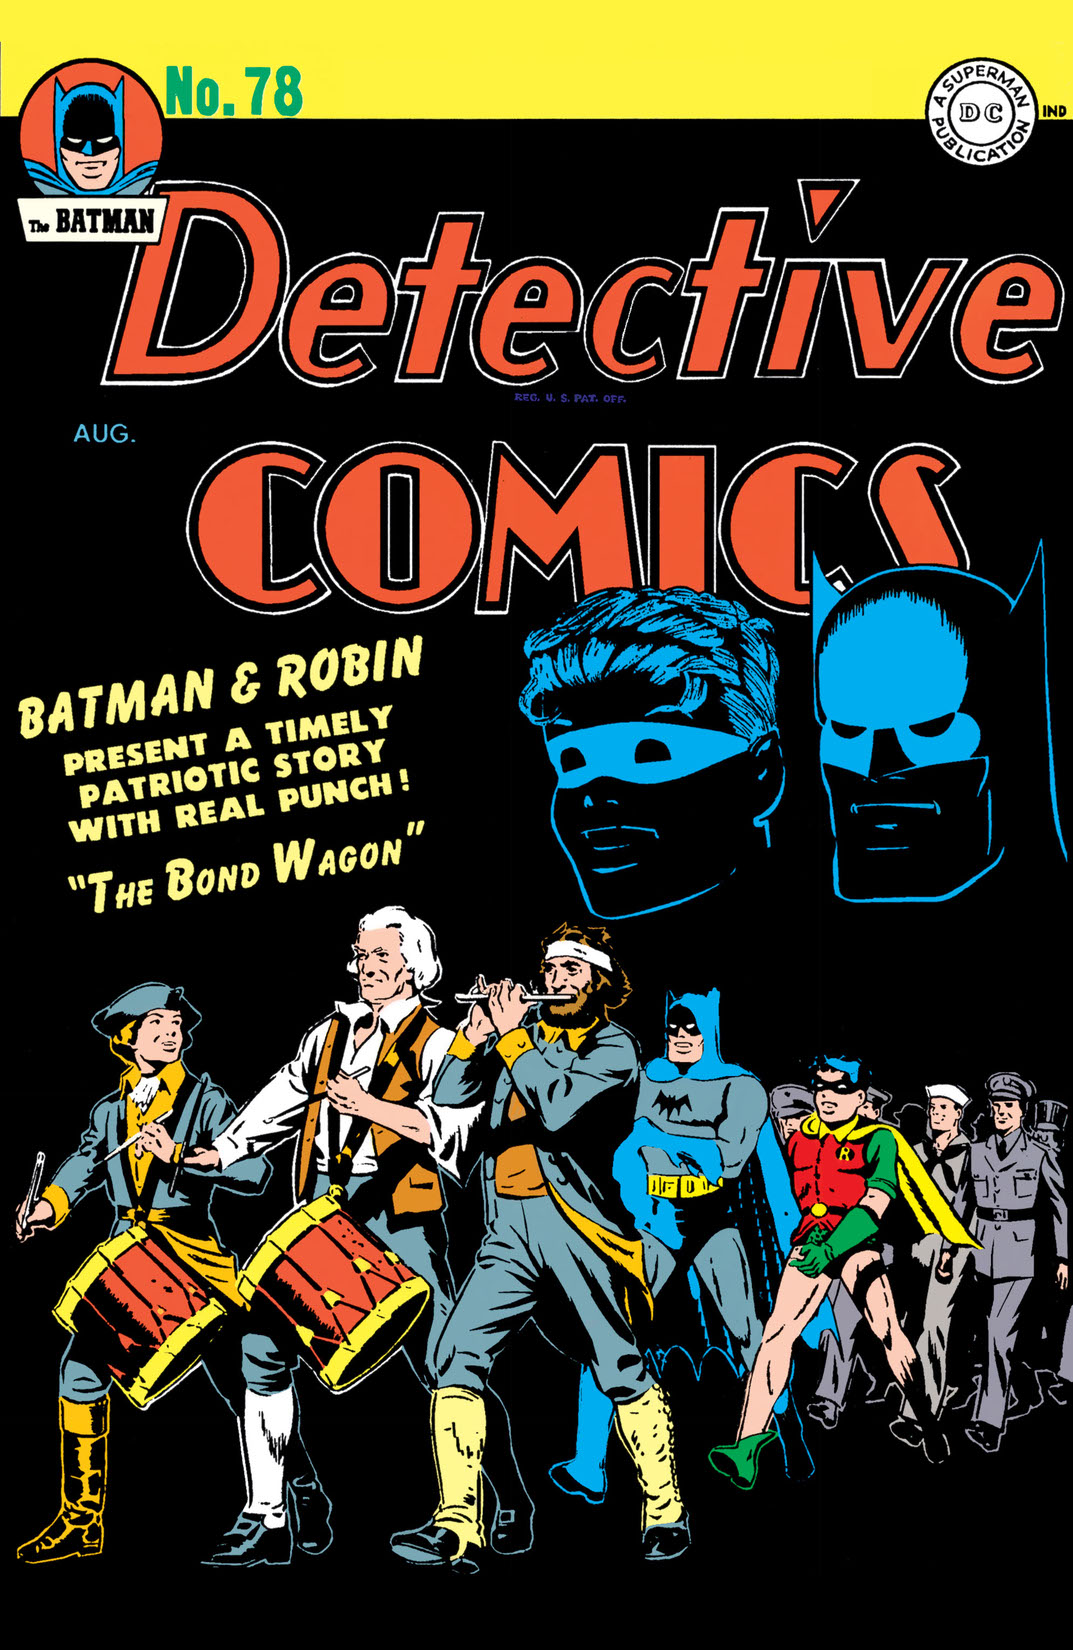 Detective Comics (1942-) #78 preview images